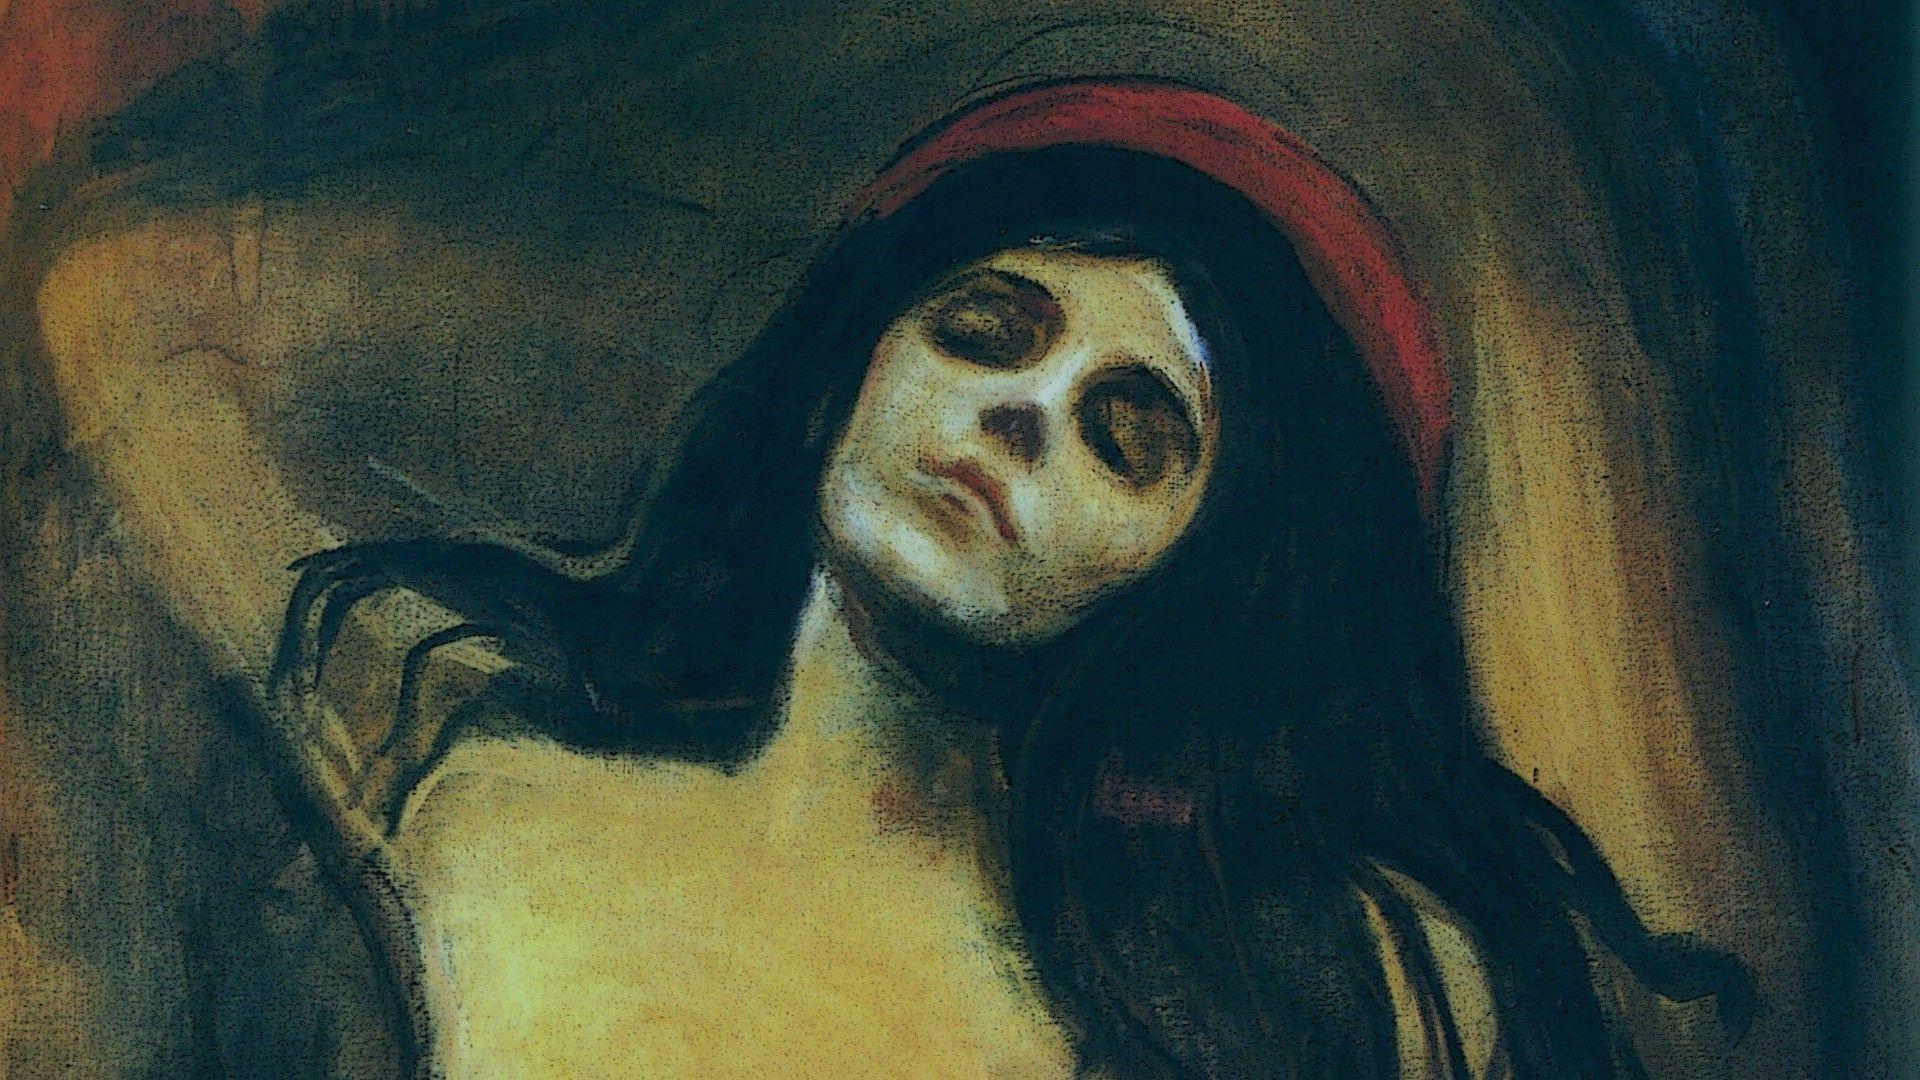 Painting Edvard Munch asleep wallpaper and image